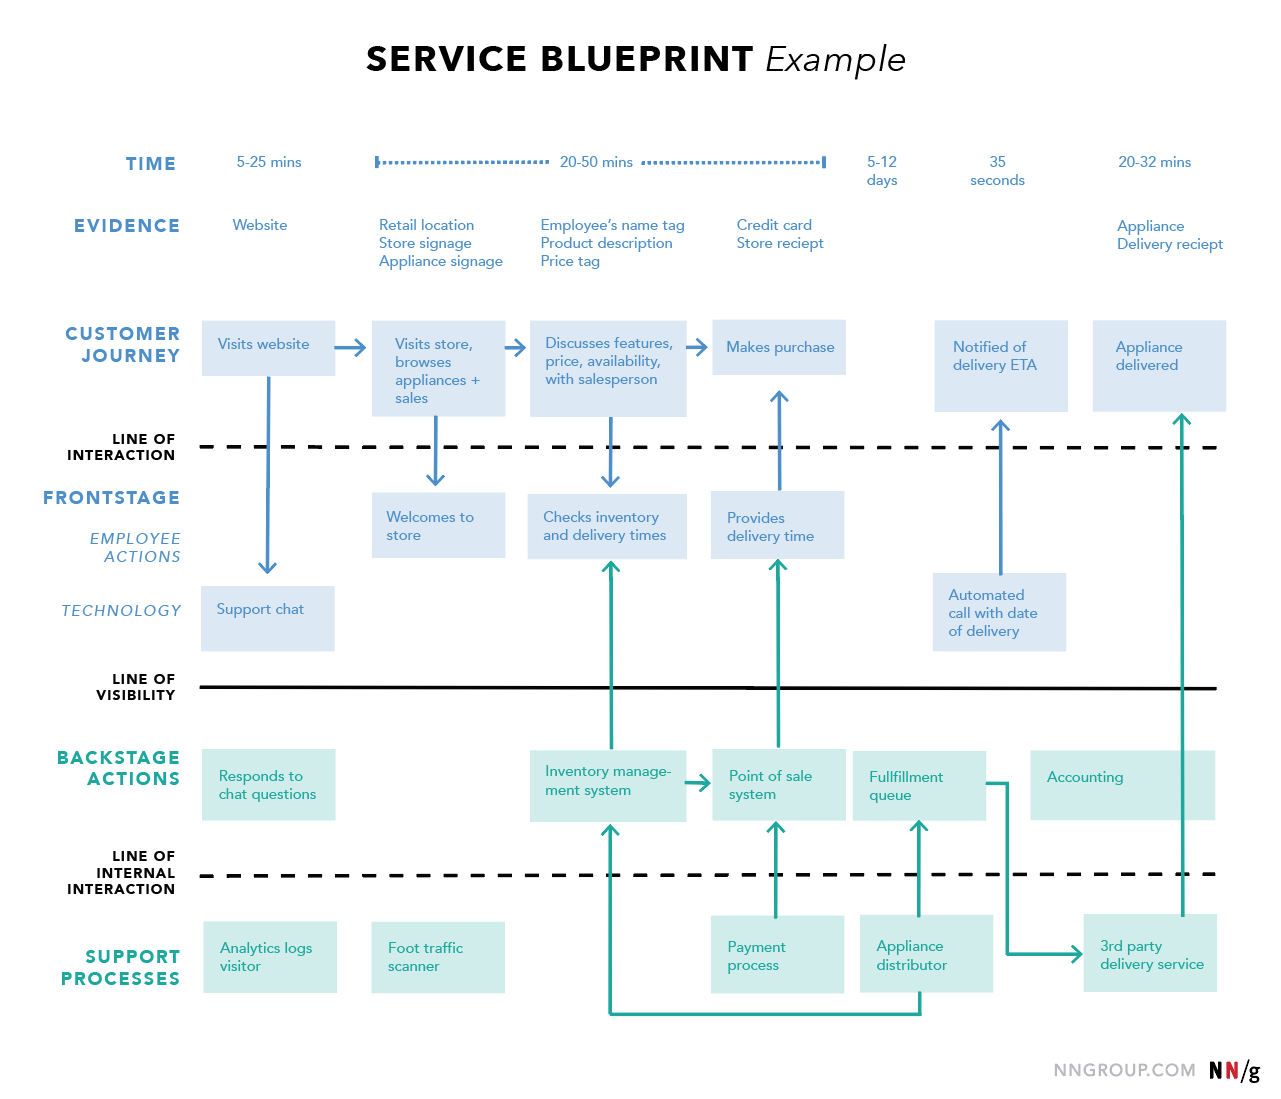 Service blueprint example NNGroup